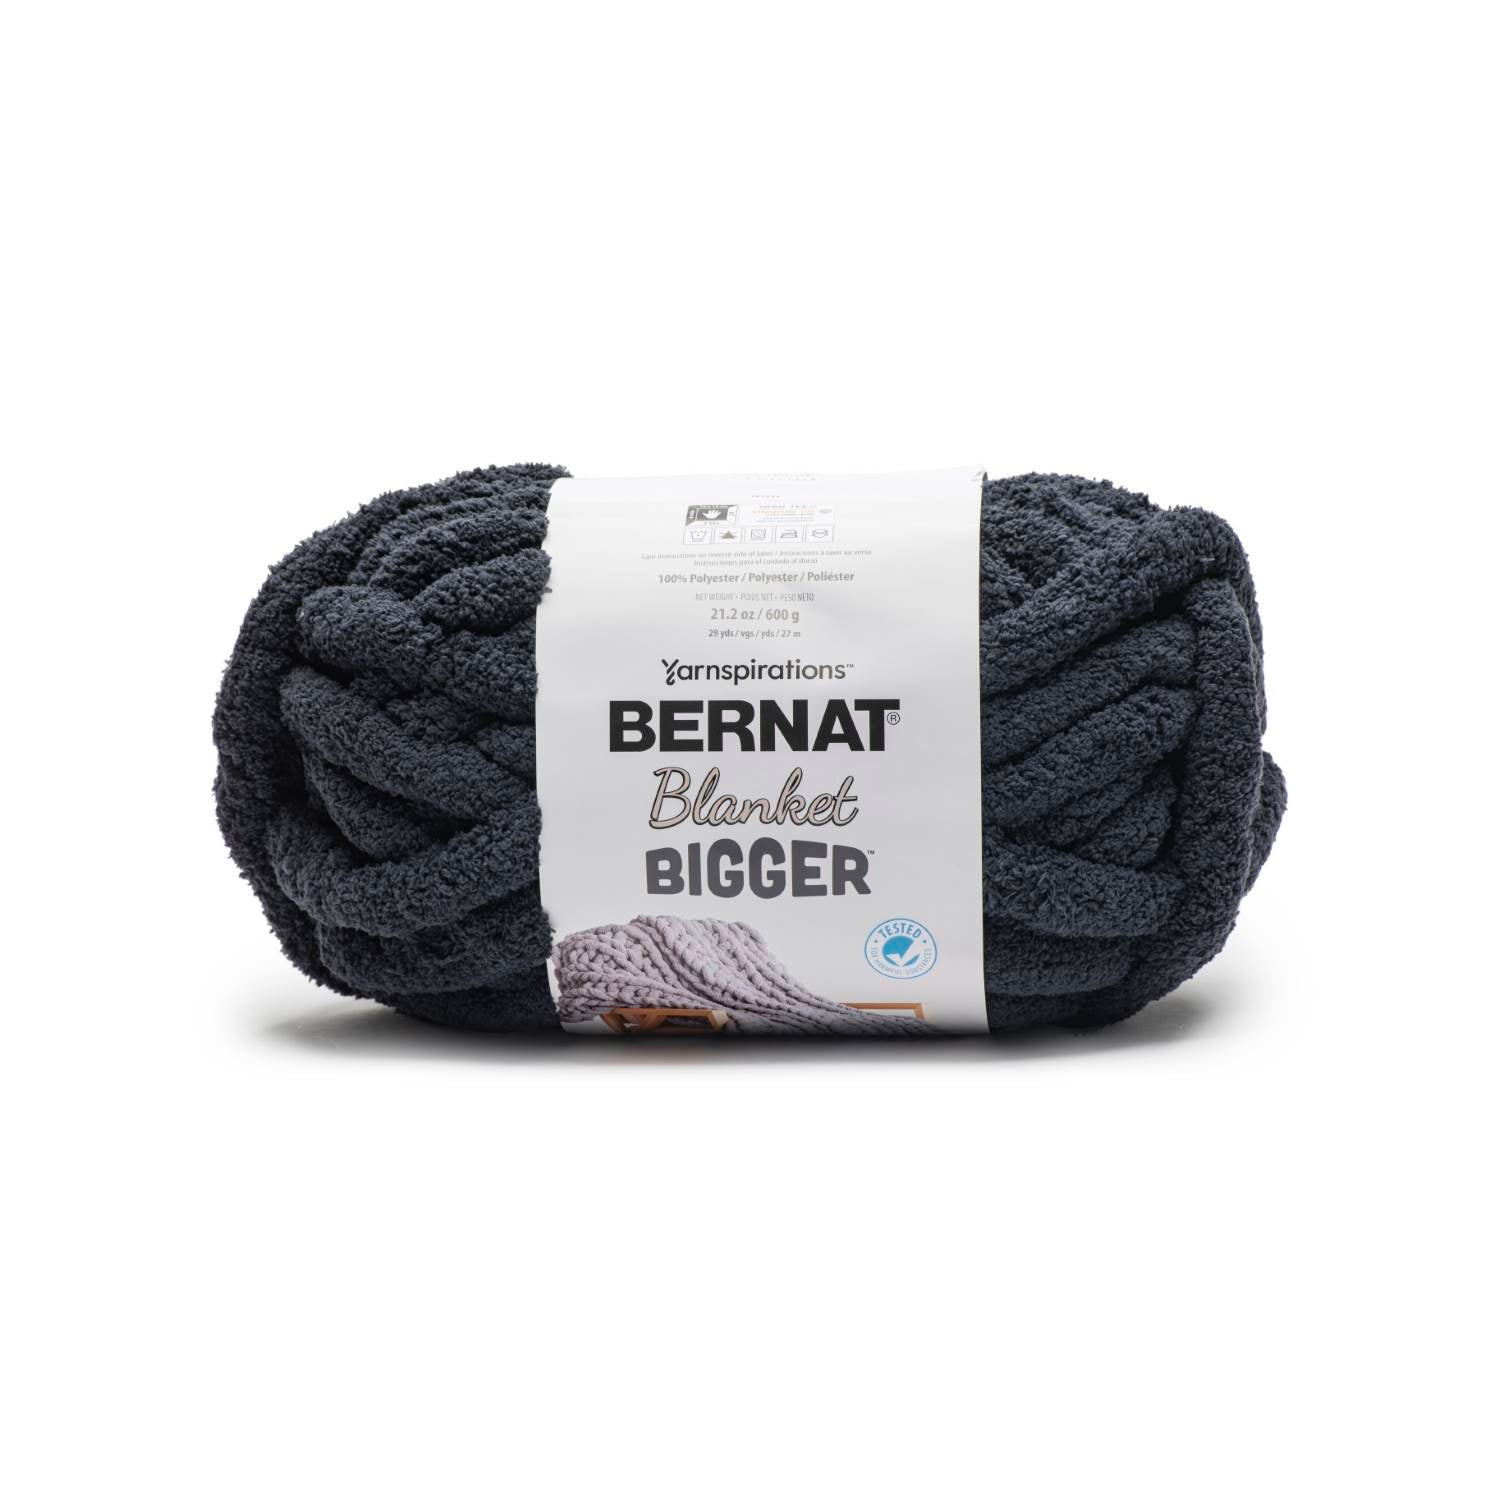 Bernat Blanket Bigger Yarn (600gr/21.2oz) - Clearance shades